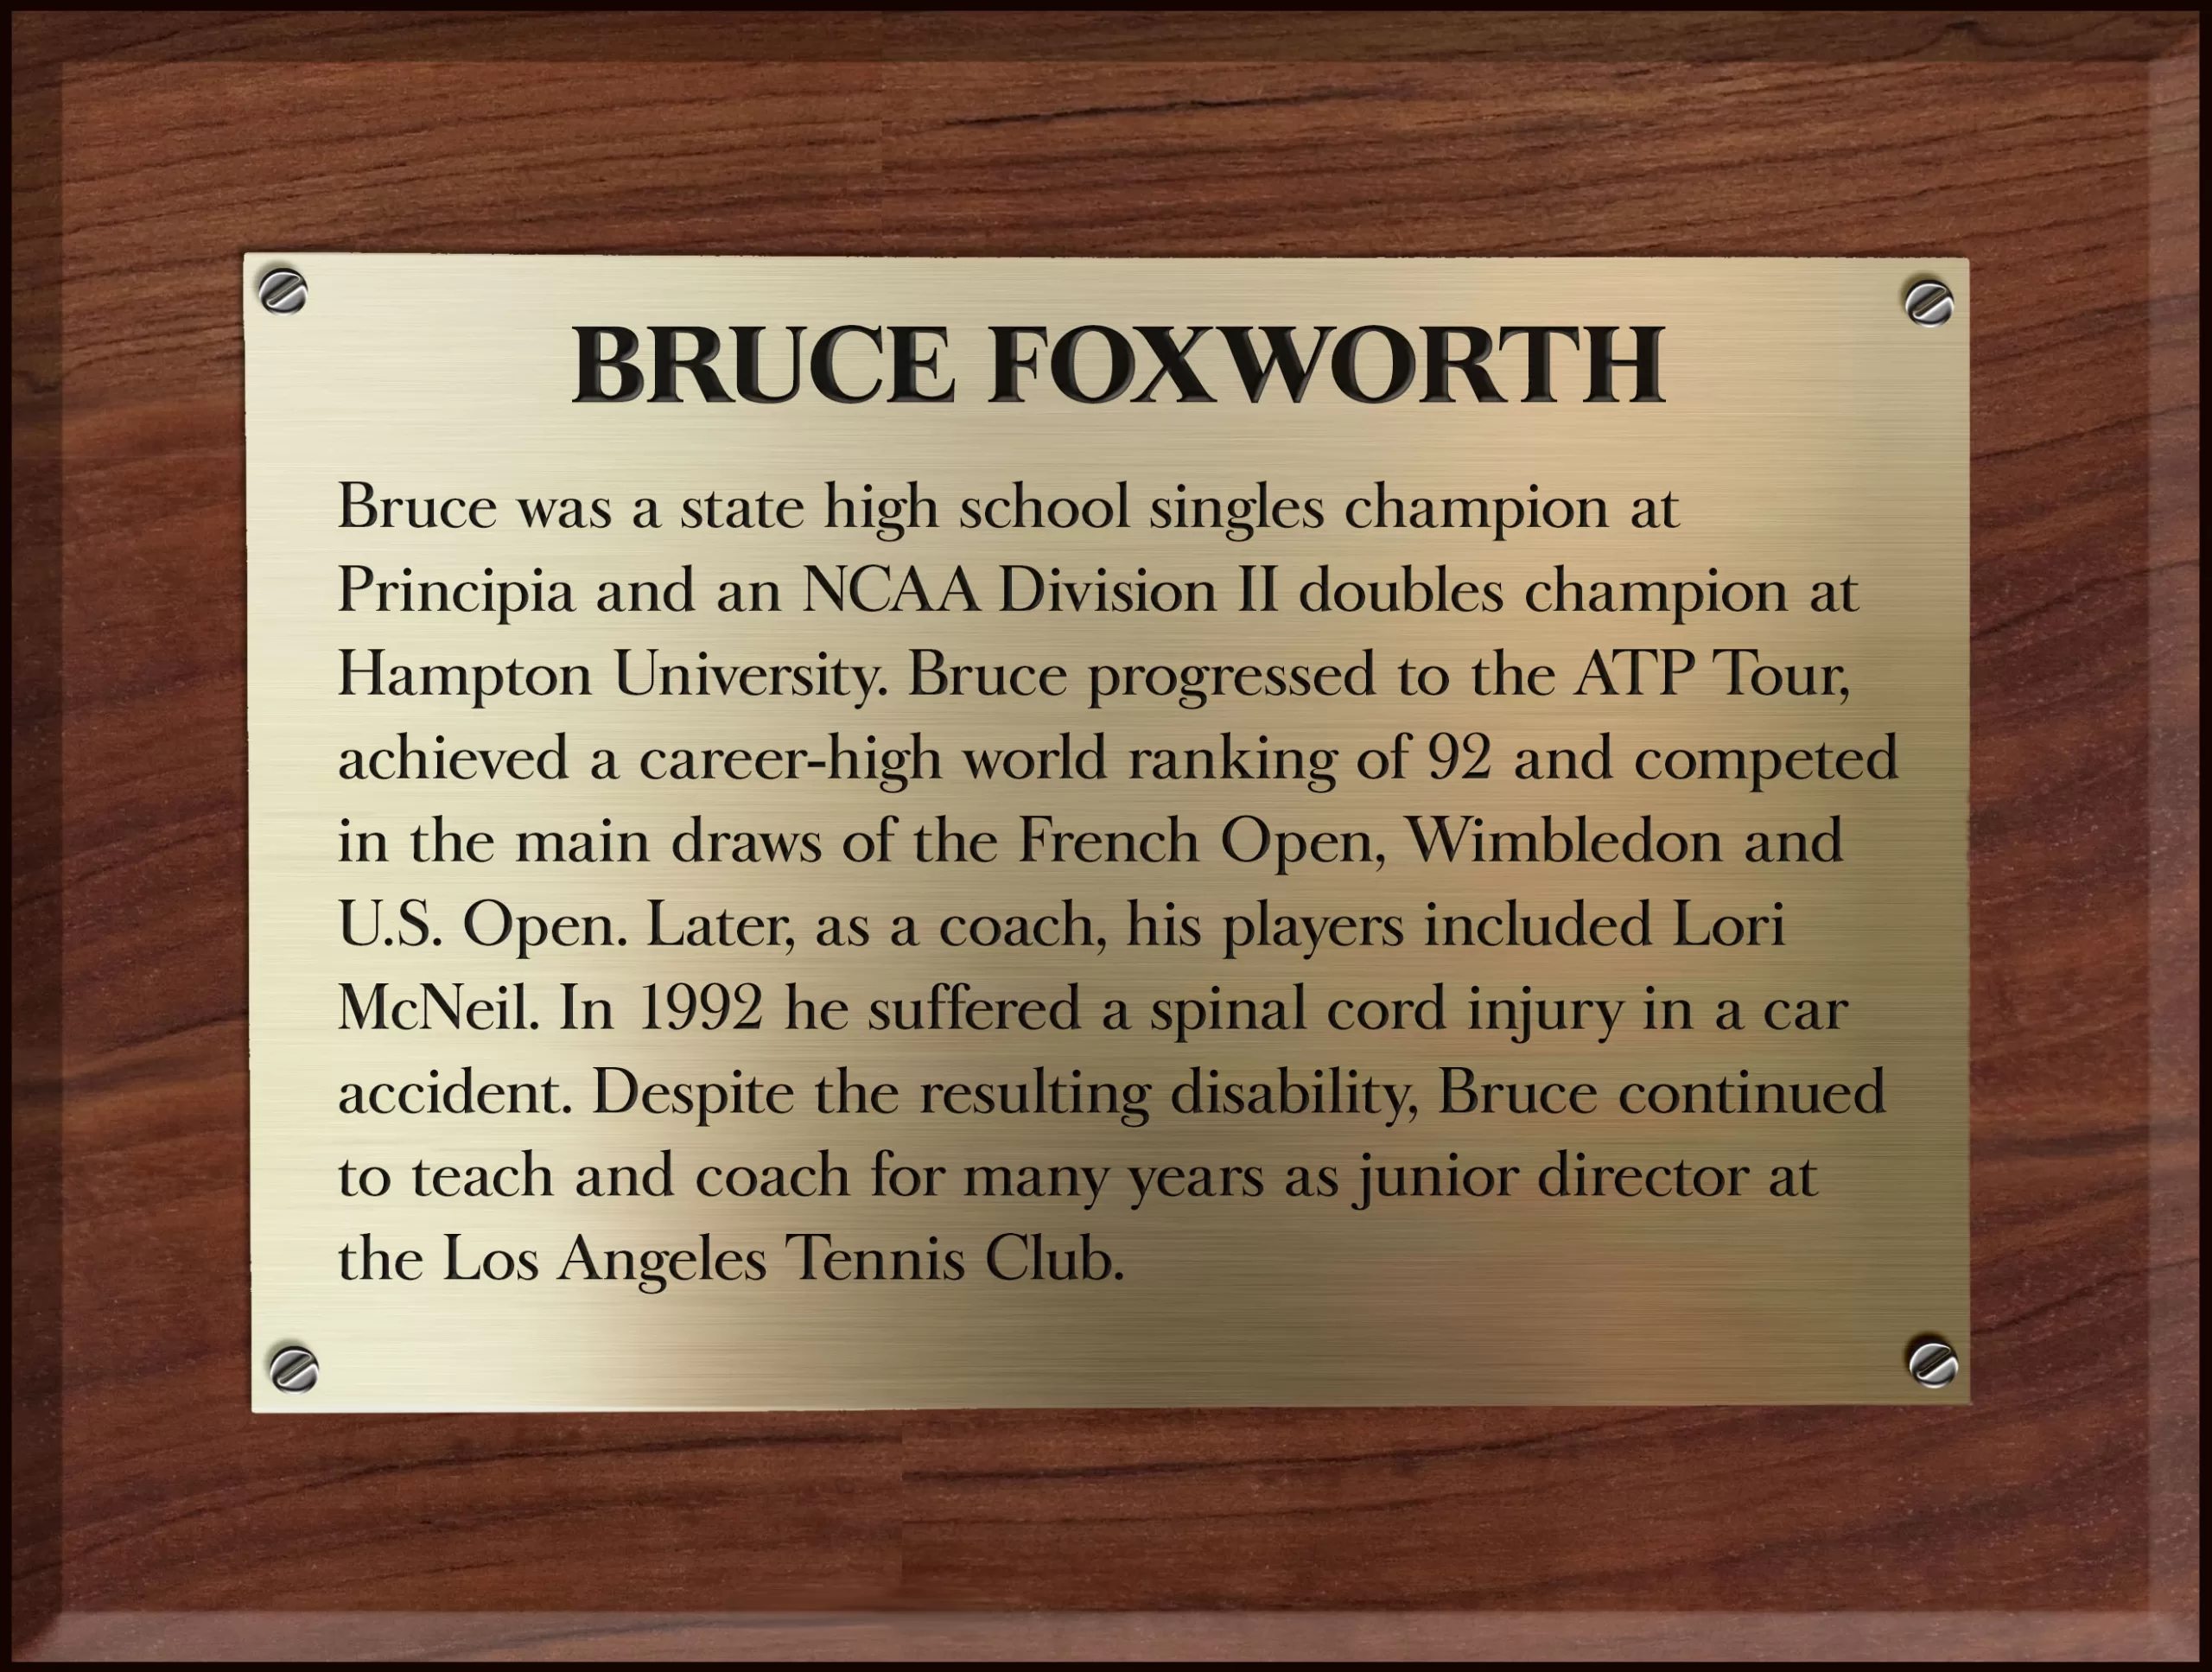 Bruce Foxworth